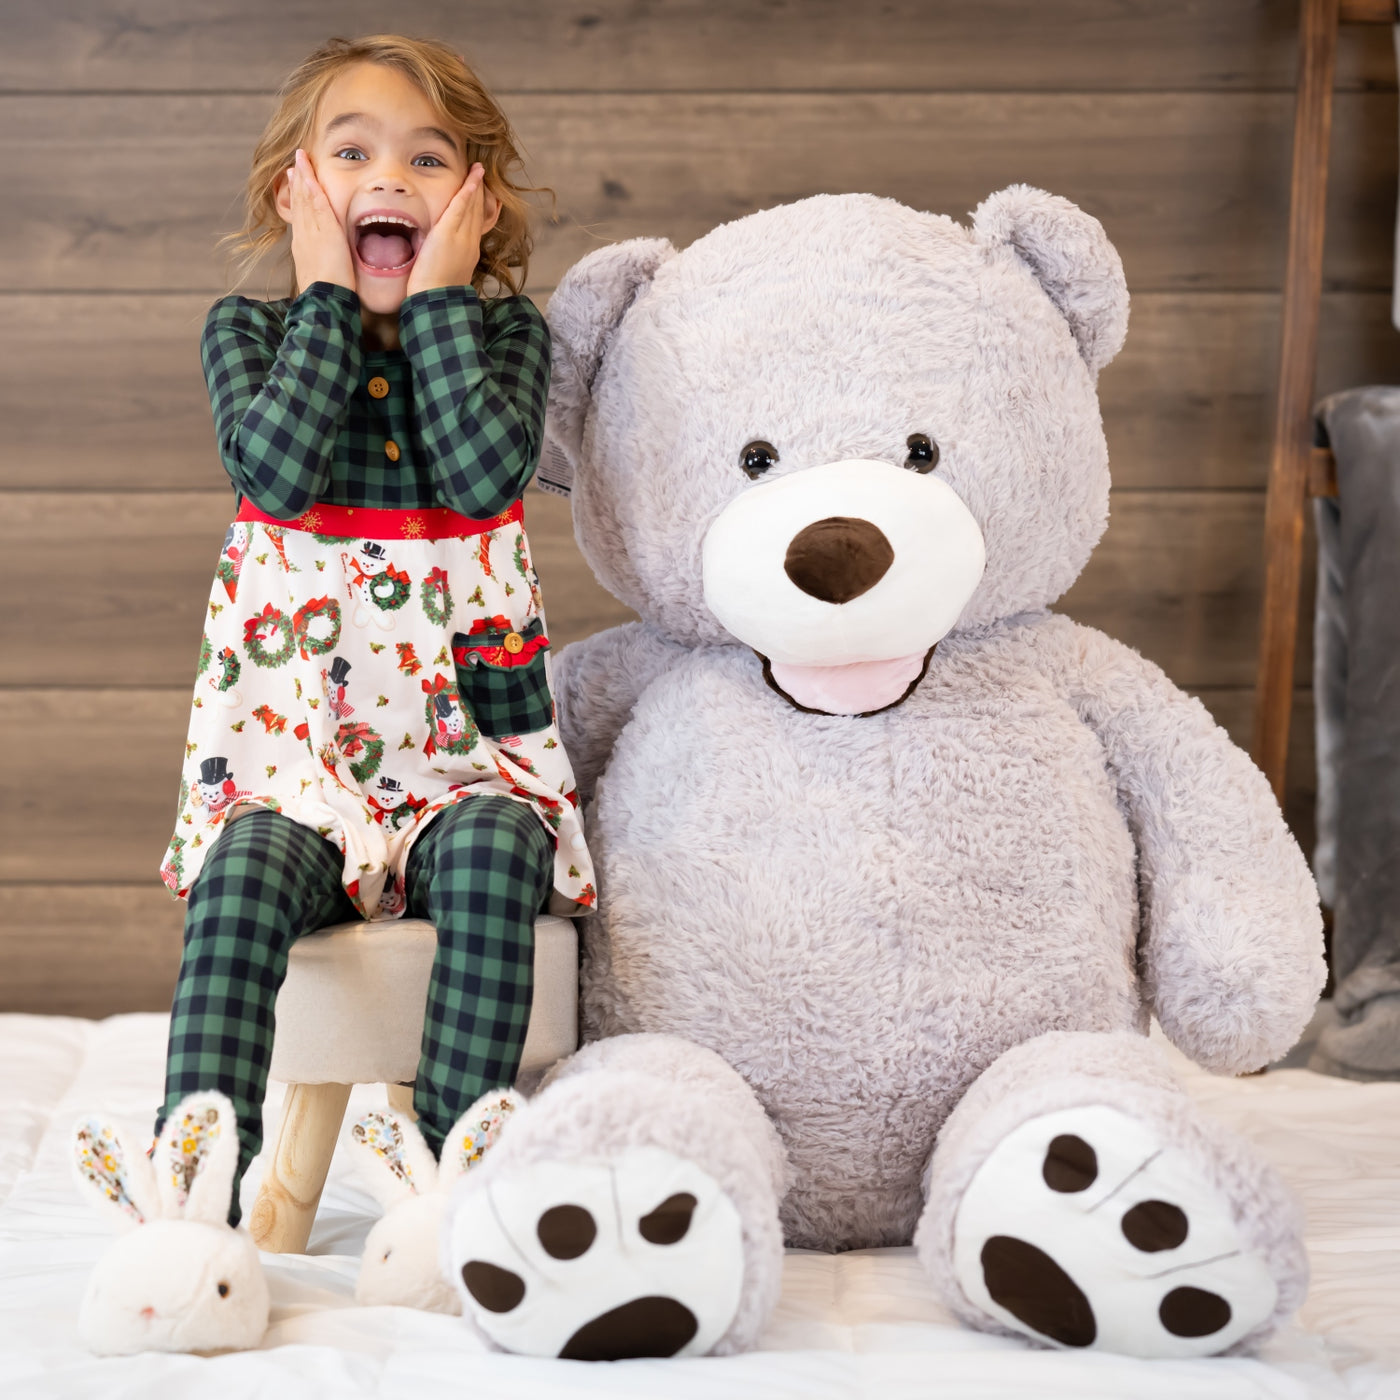 Giant Teddy Bear Stuffed Animal Toy, 51 Inches